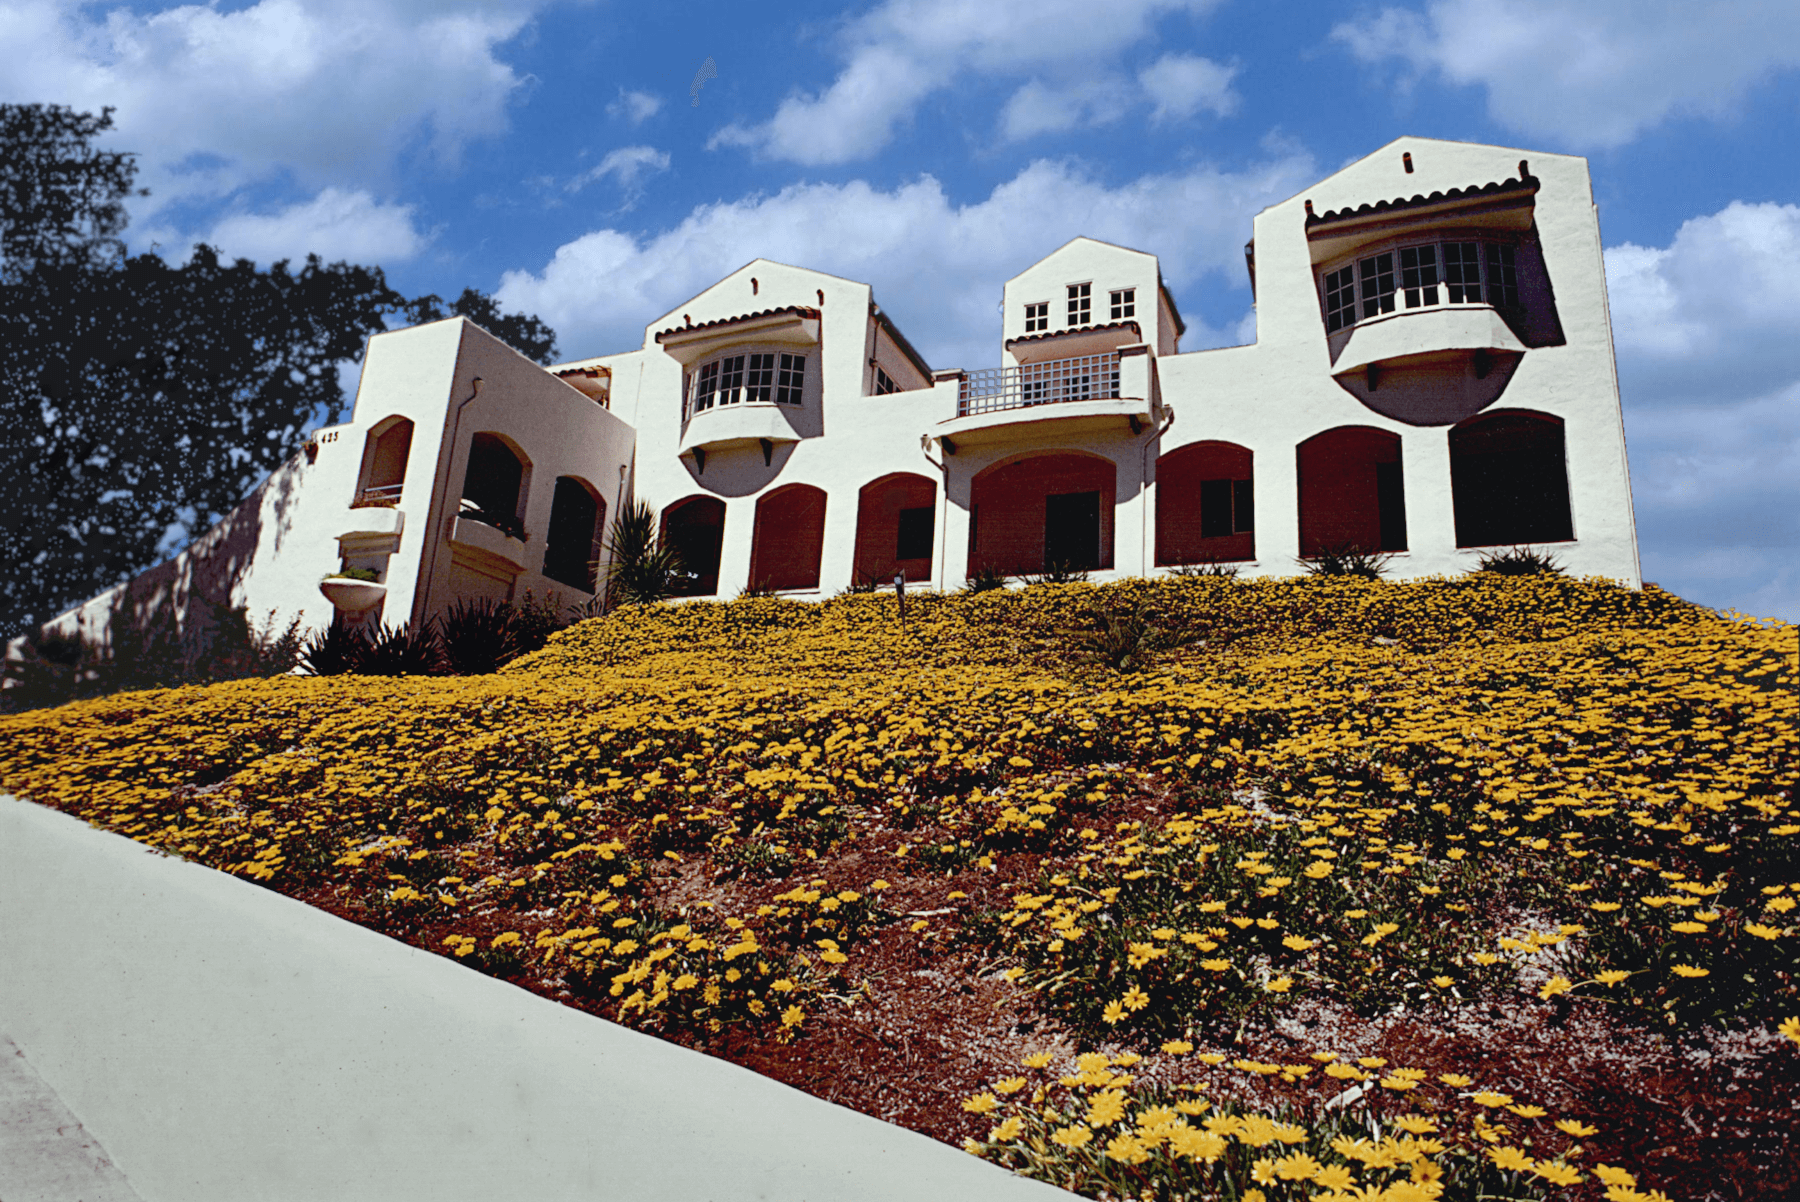 Image of Vista Del Mar house located in Aptos, California, designed by architect Jeff Finsand.